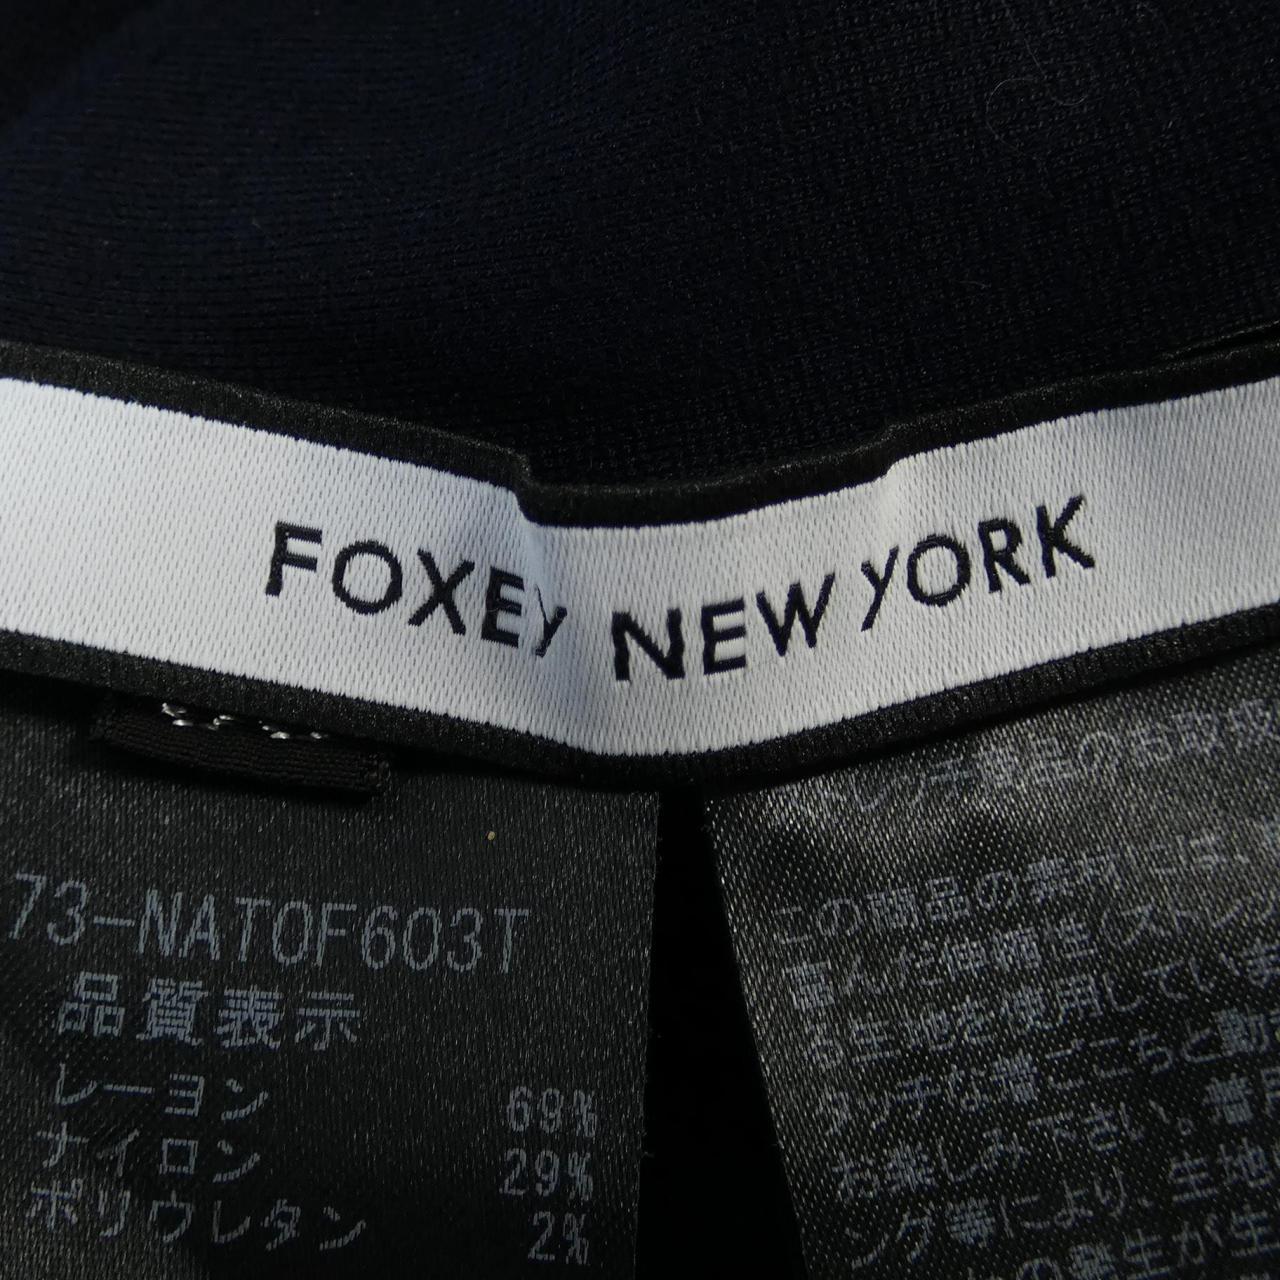 KOMEHYO |FOXEY NEW YORK Polo Shirts|Foxy New York|女裝|上衣|Polo